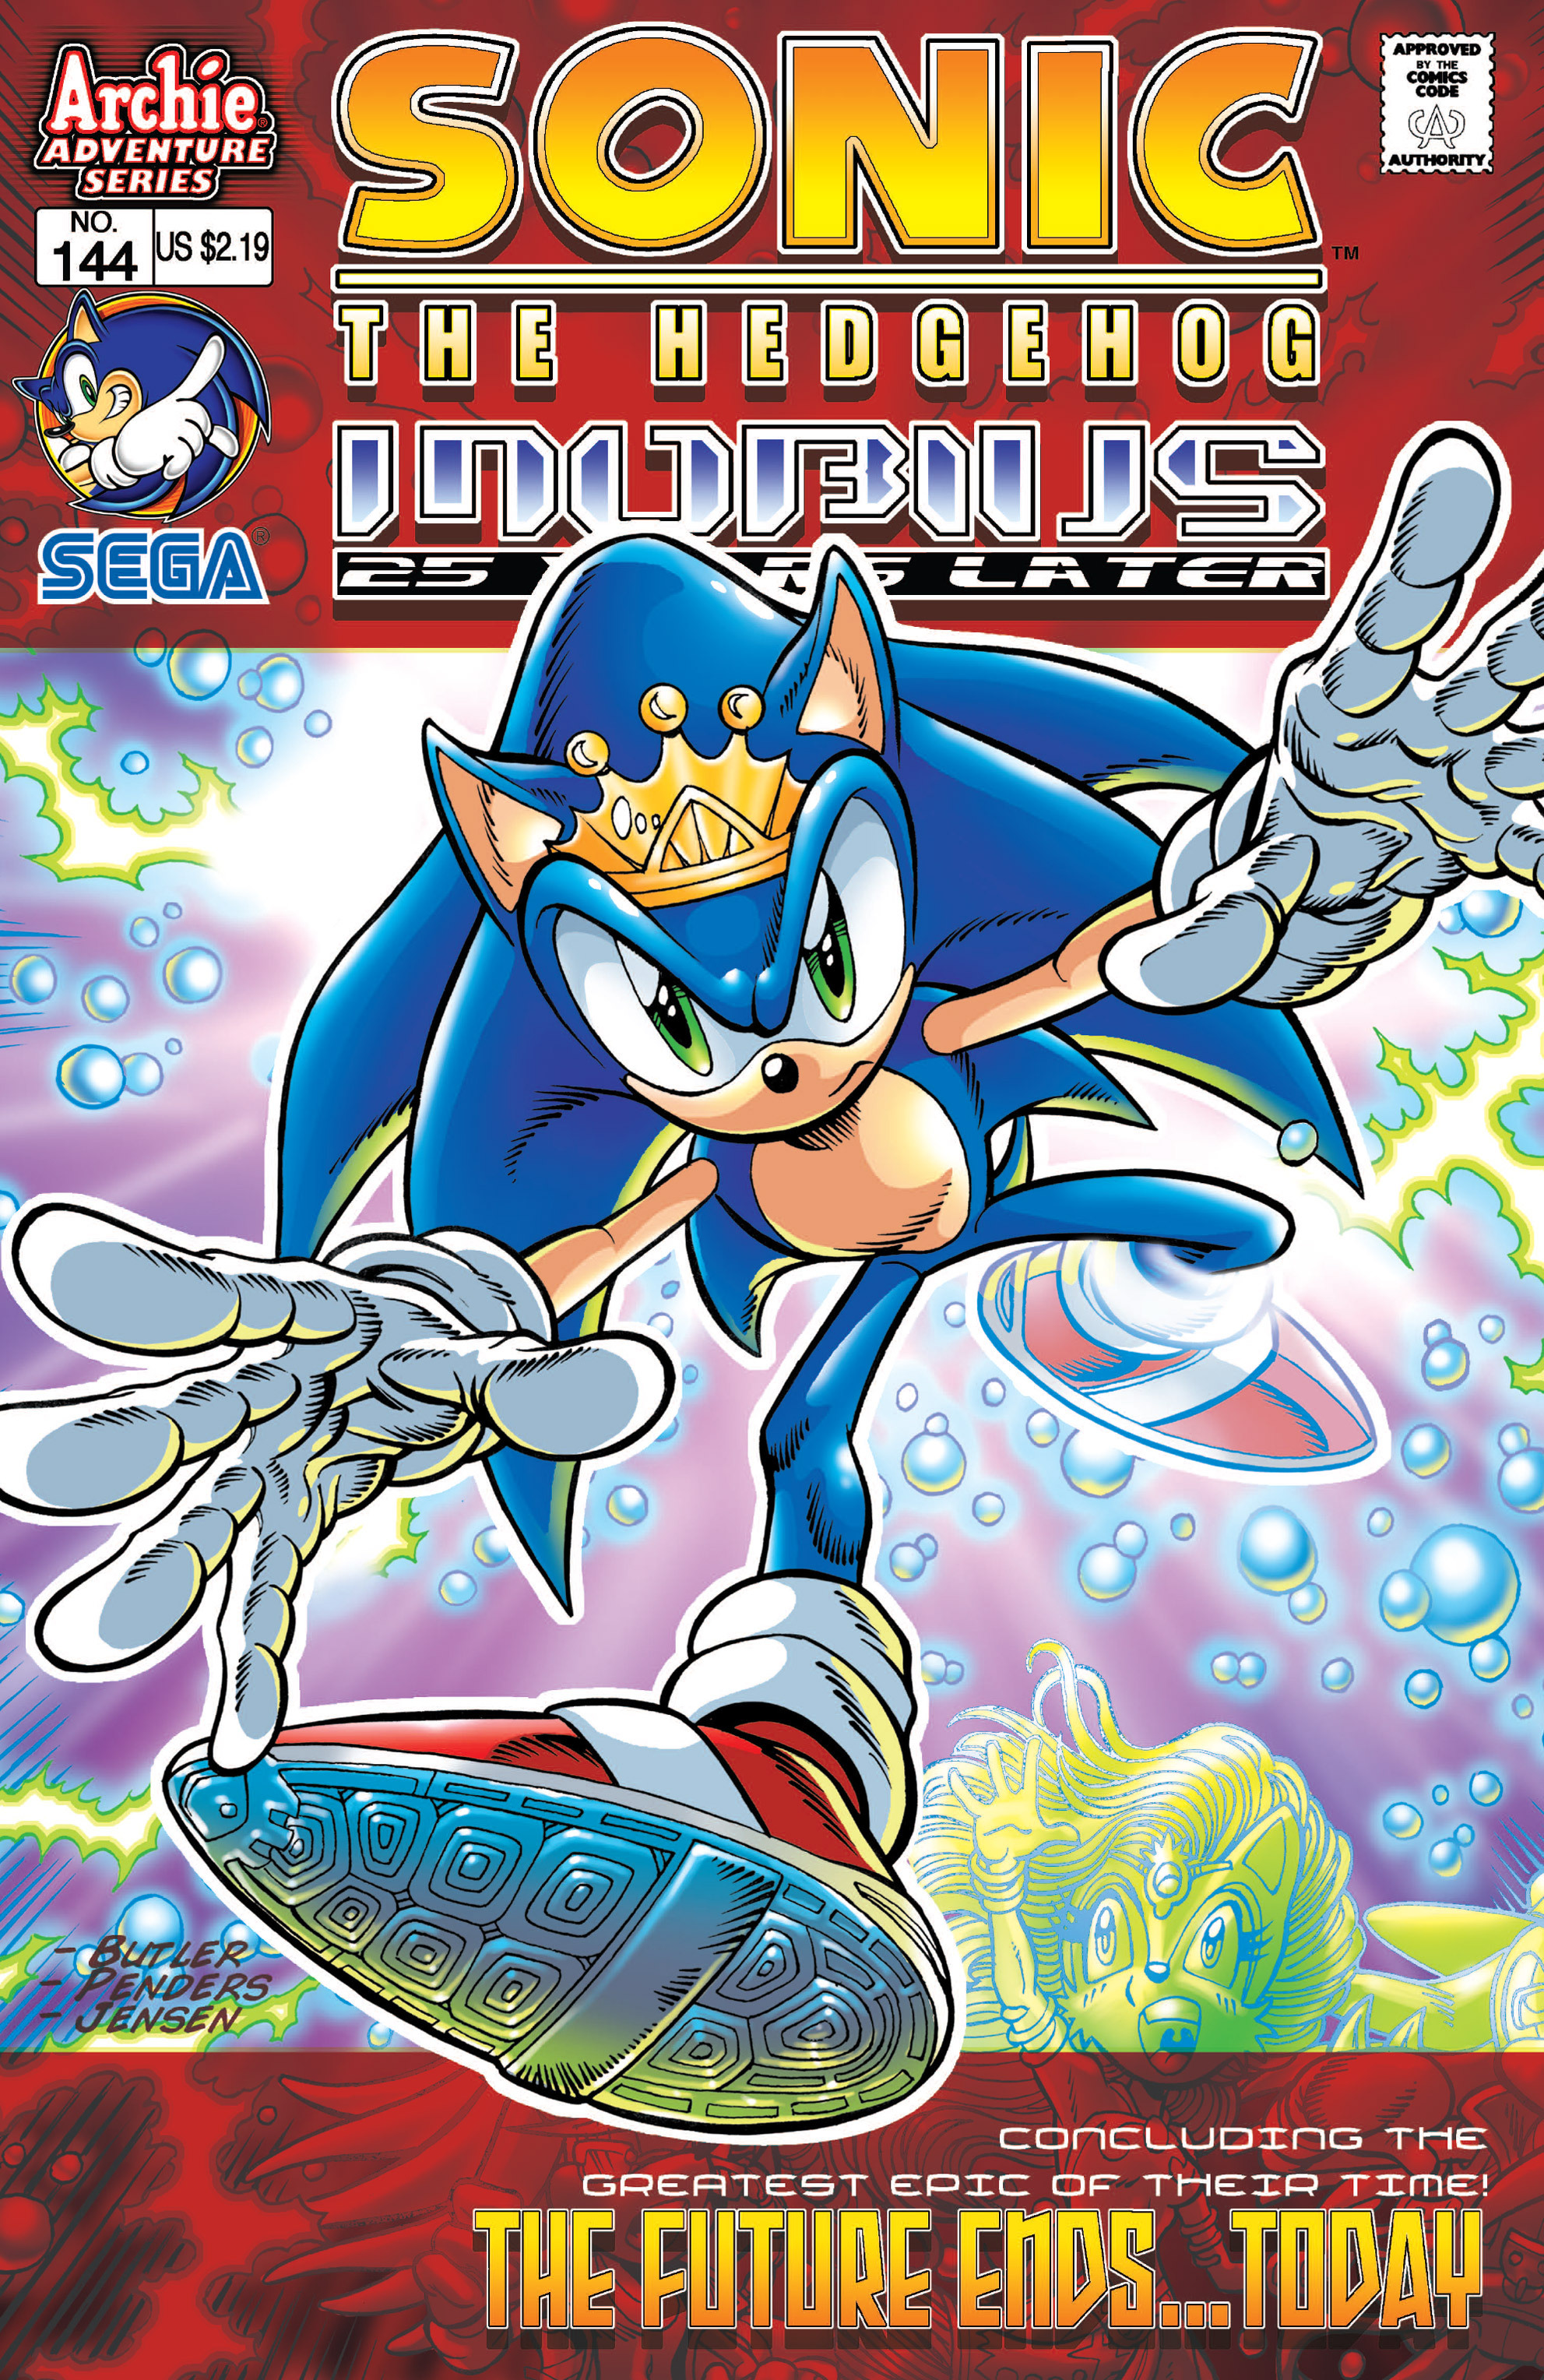 Sonic the Hedgehog (Archie Comics) - Wikipedia